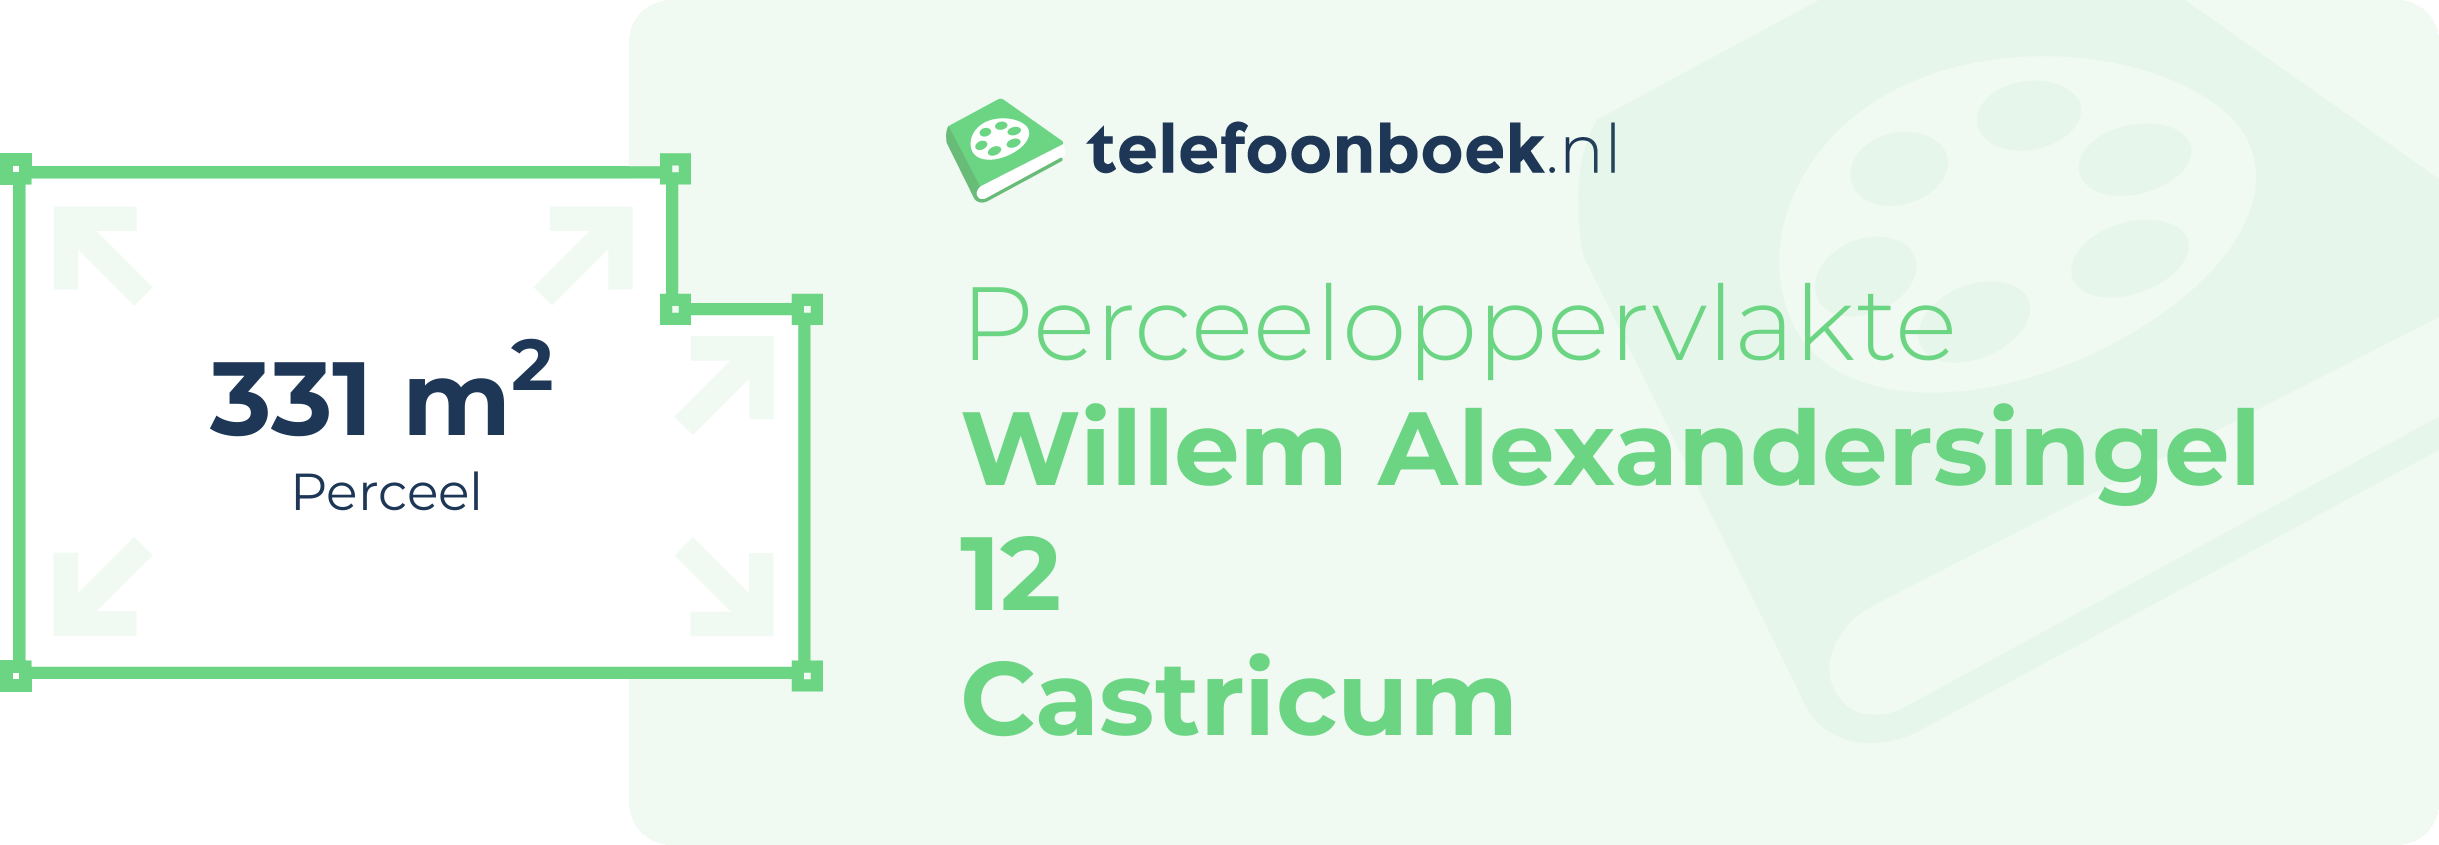 Perceeloppervlakte Willem Alexandersingel 12 Castricum